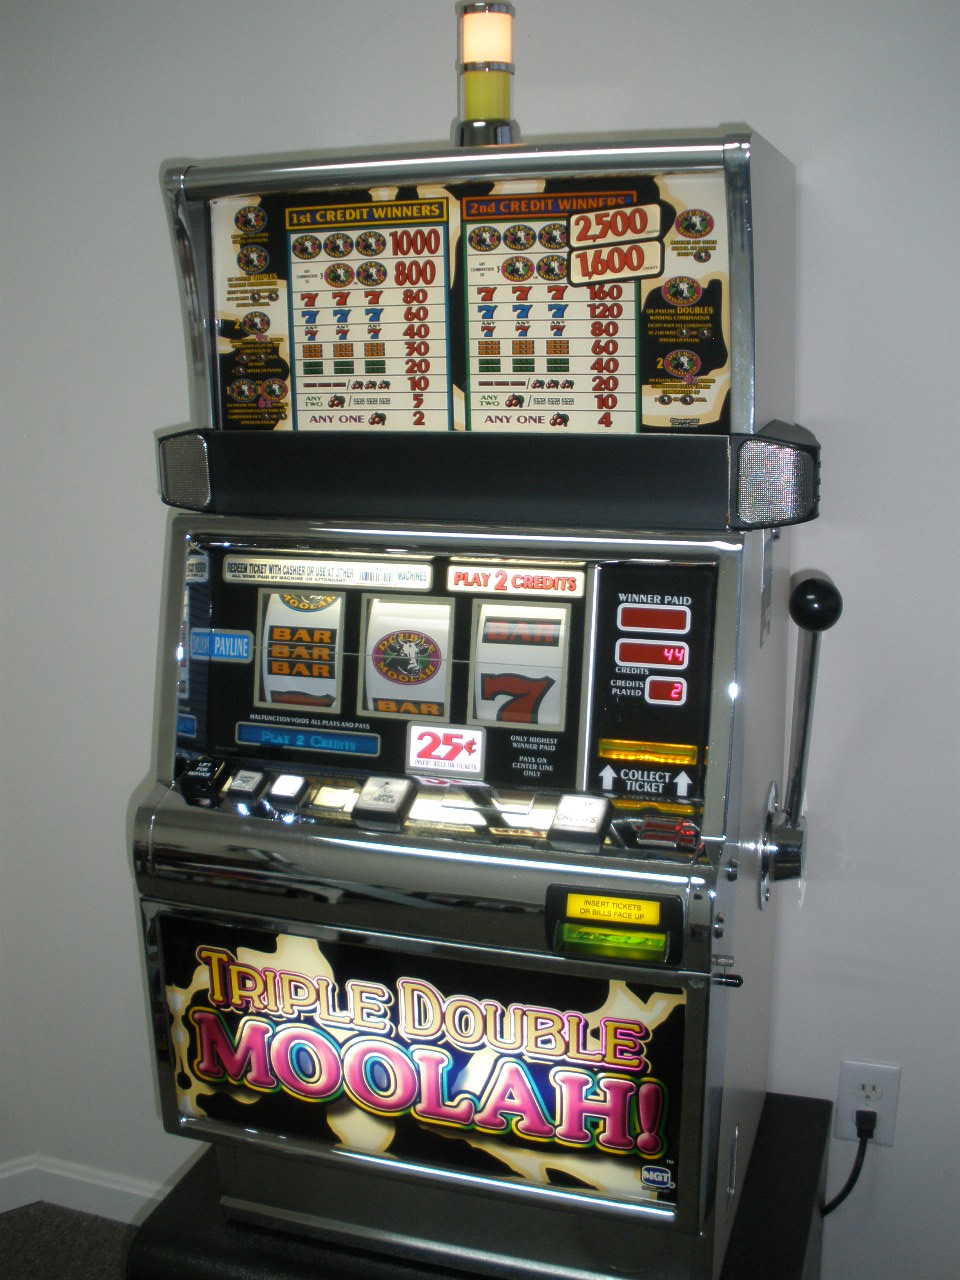 IGT TRIPLE DOUBLE MOOLAH S2000 Slot Machine For Sale • Gambler's Oasis USA